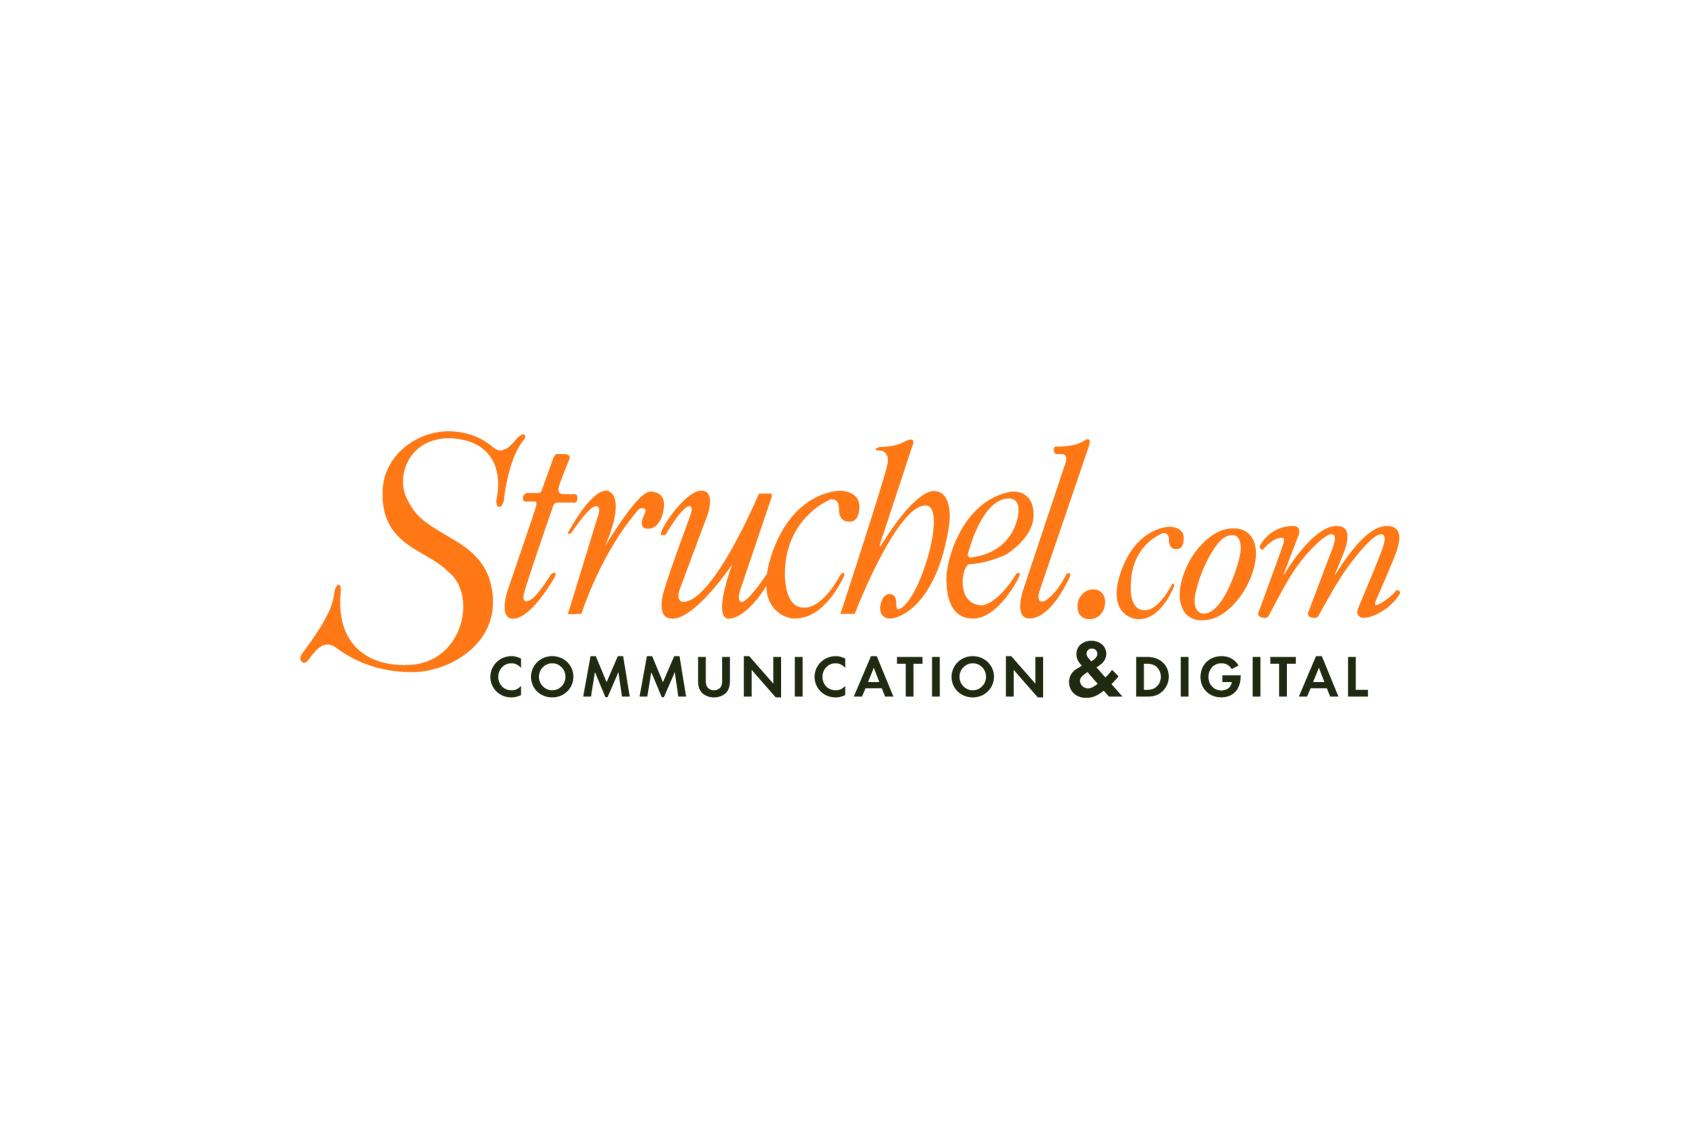 (c) Struchel.com